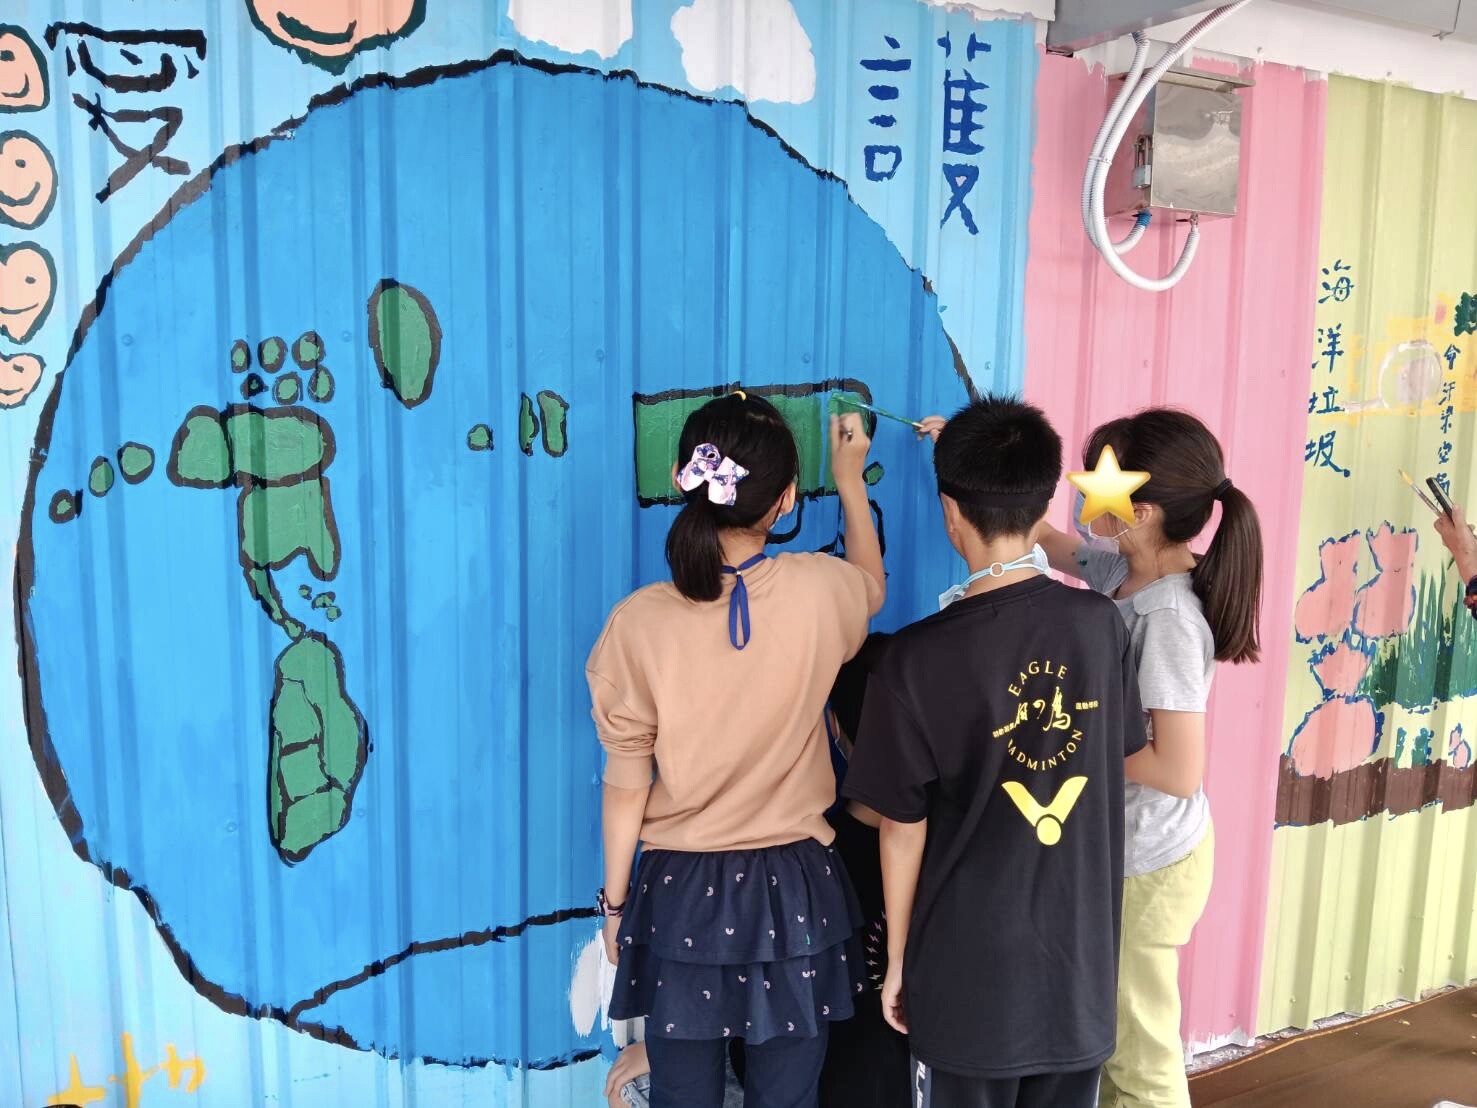 Sustainable Development Community-Led Mural